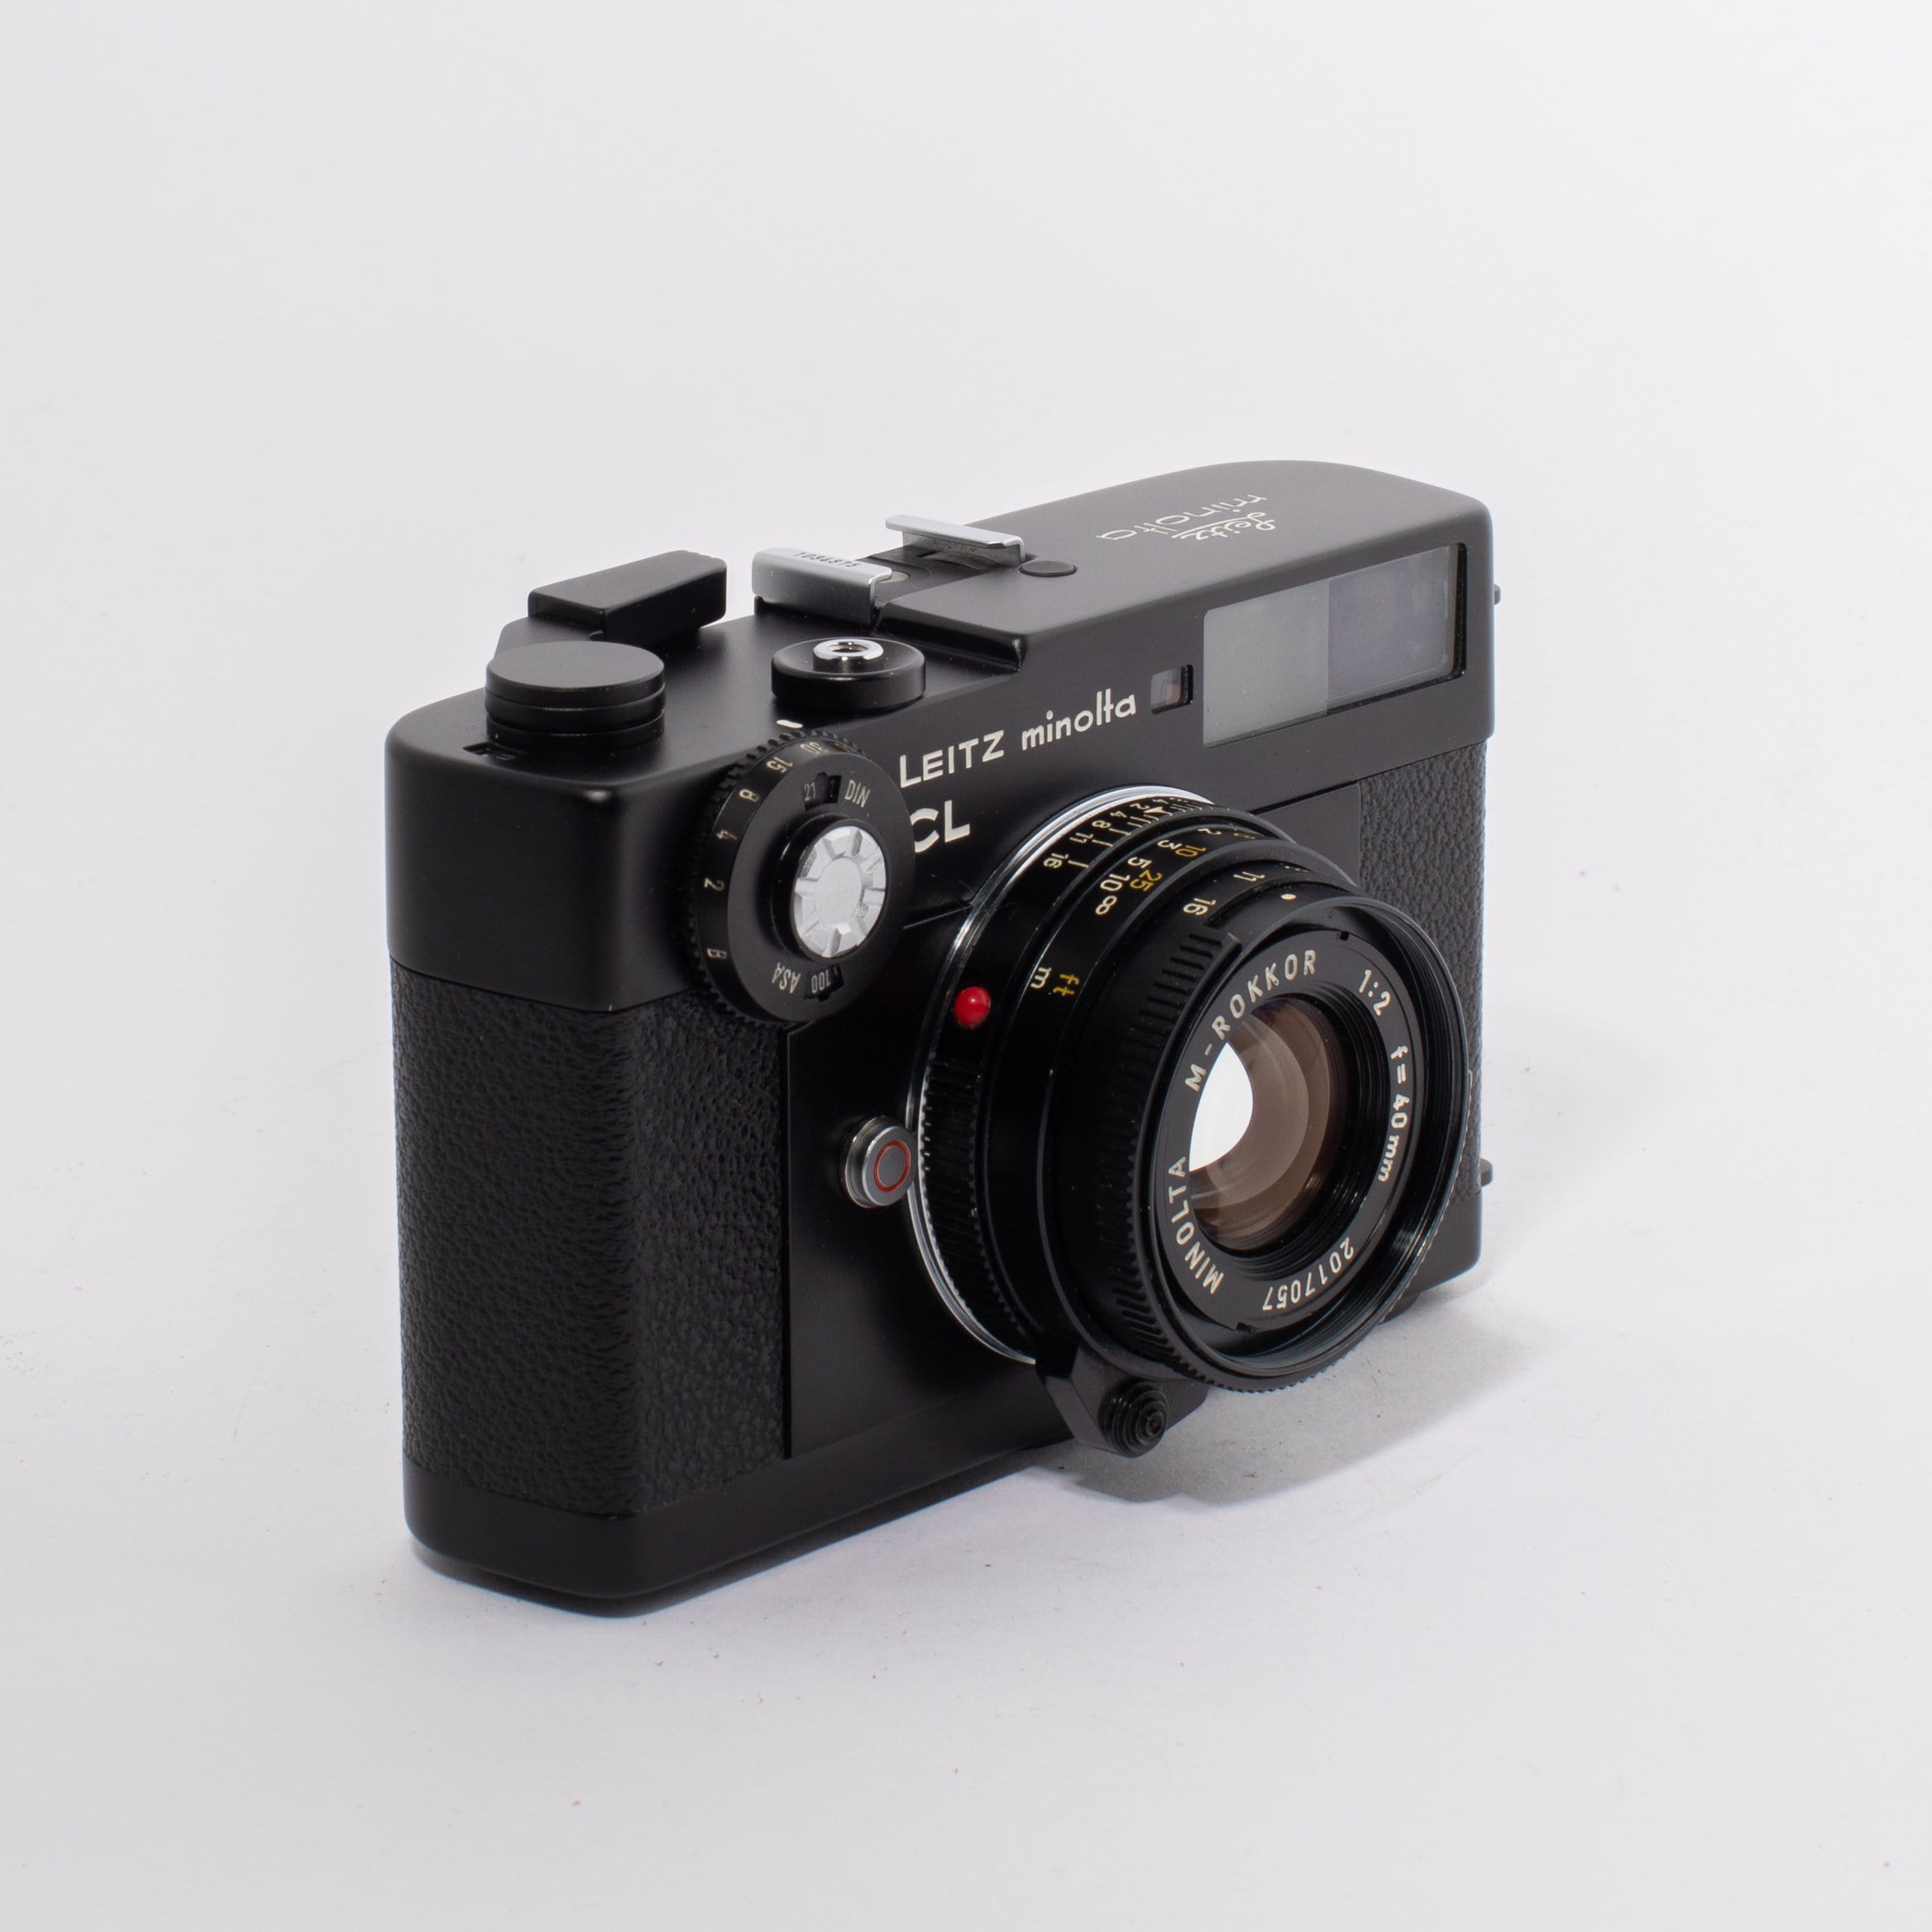 RARE - Near Mint In-Box Leica Leitz Minolta CL + M-Rokkor 40mm F/2